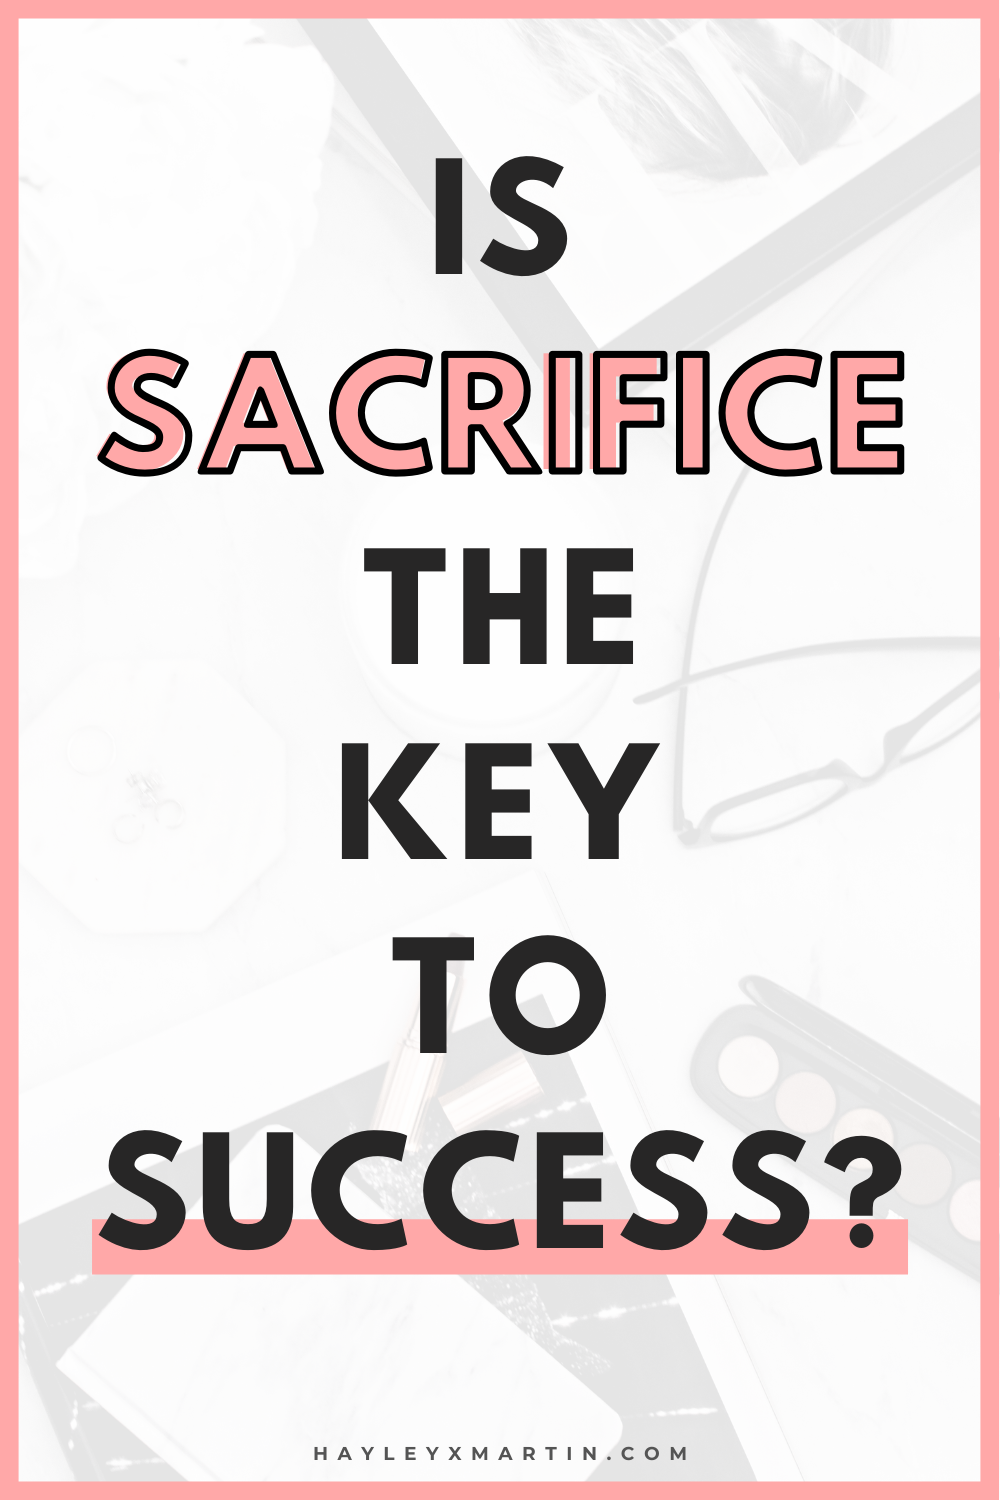 IS SACRIFICE THE KEY TO SUCCESS | HAYLEYXMARTIN